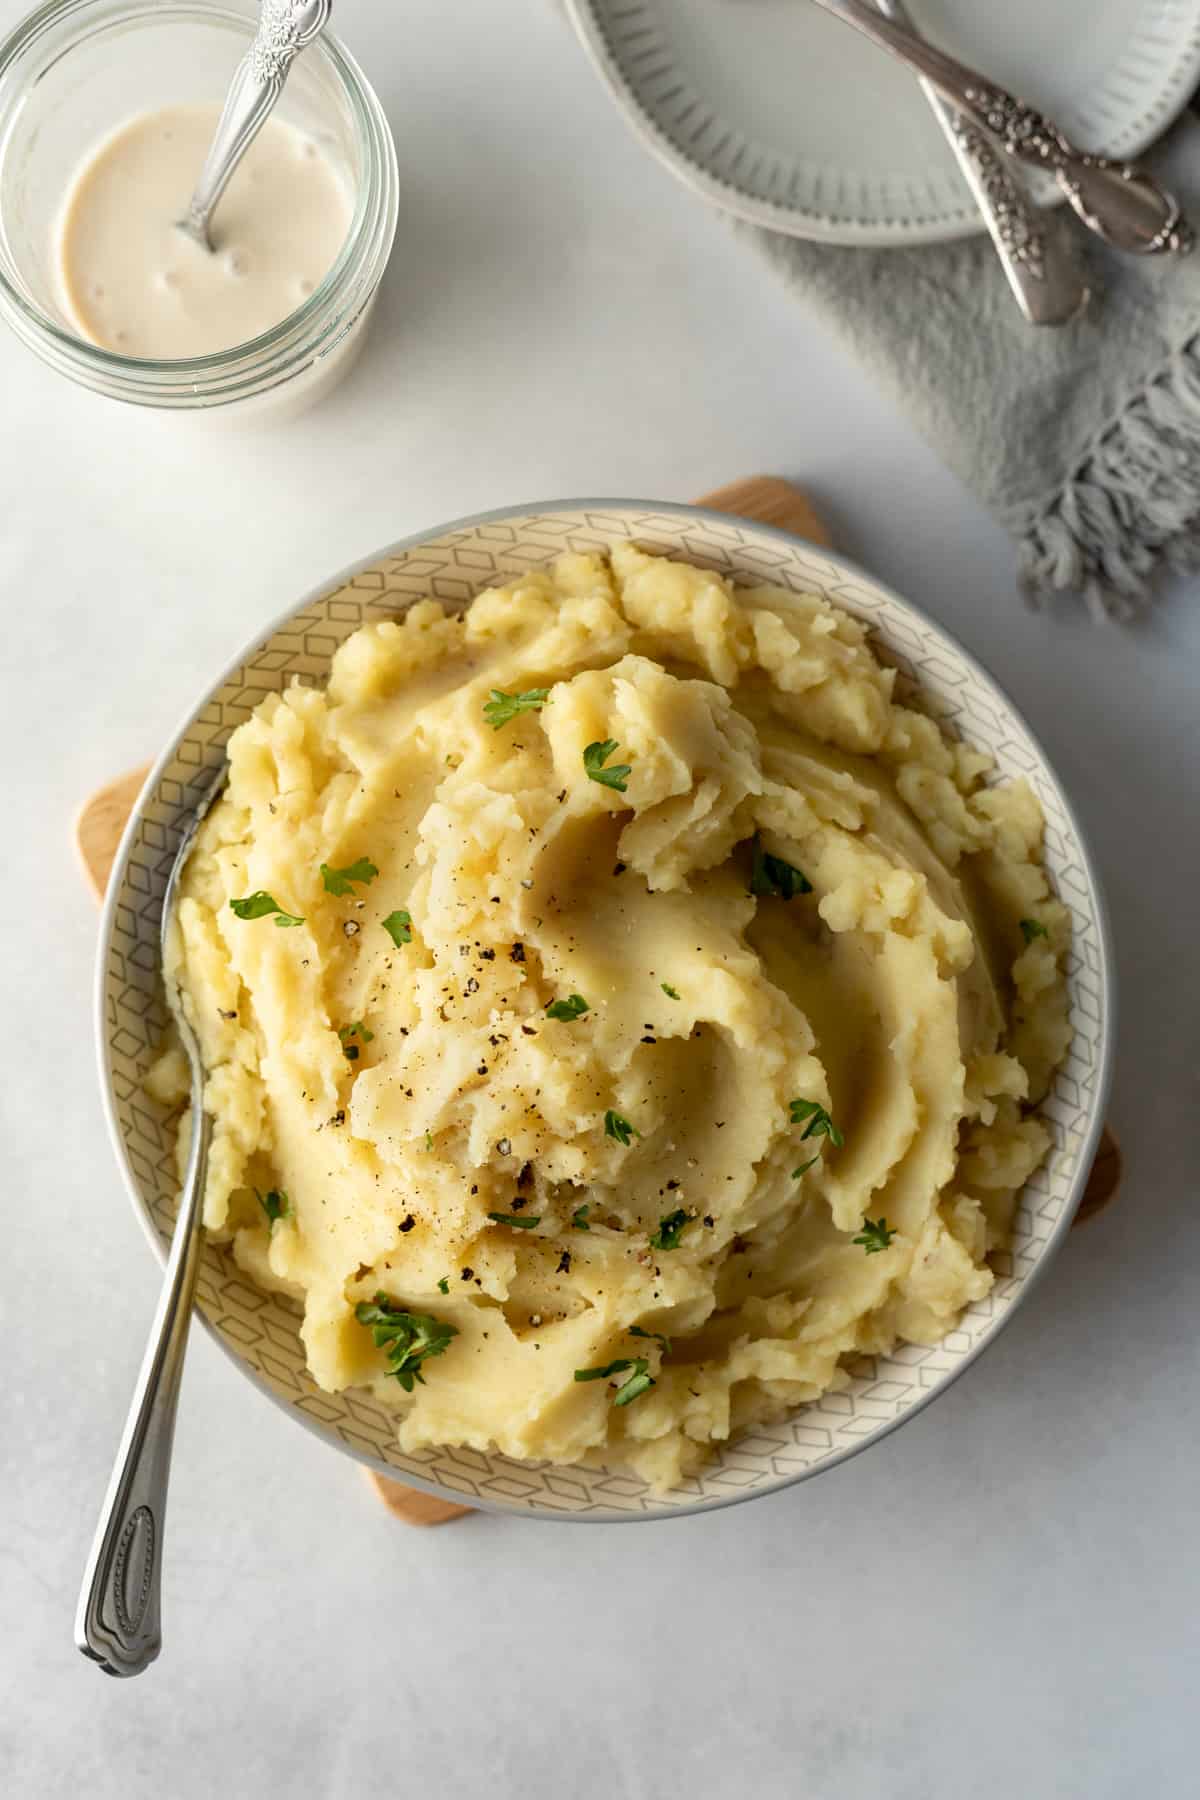 serving bowl full of creamy, golden vegan mashed potatoes.